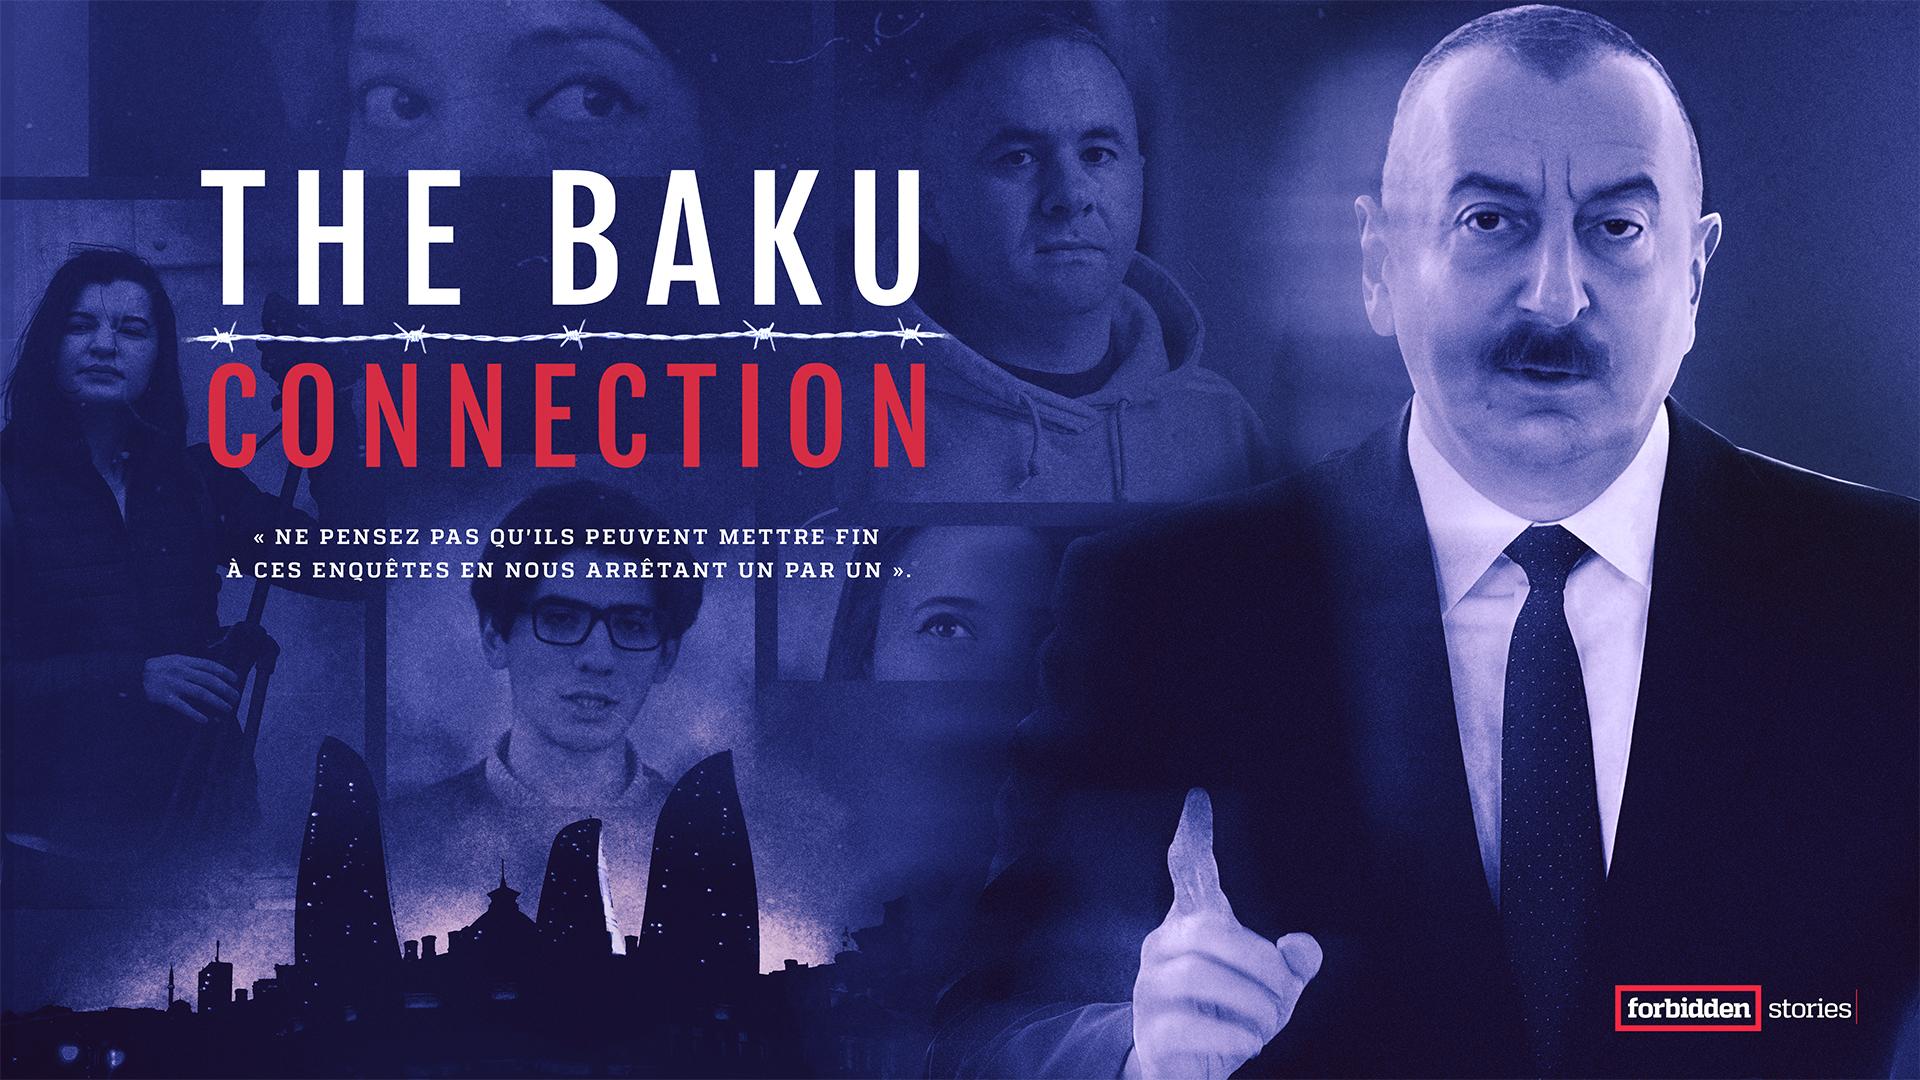 Forbidden Stories - "The Baku Connection"